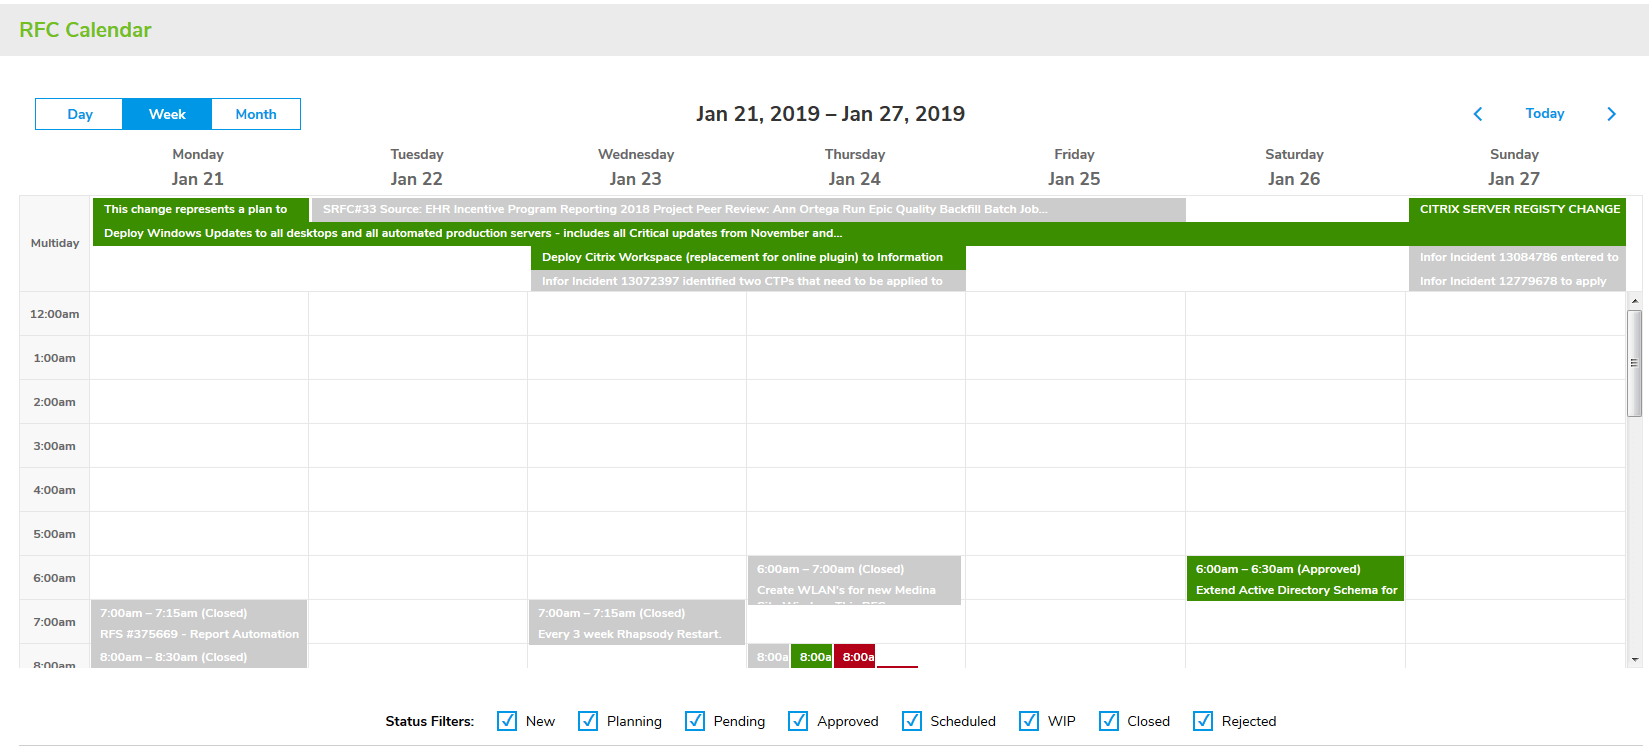 Change Management Weekly Calendar